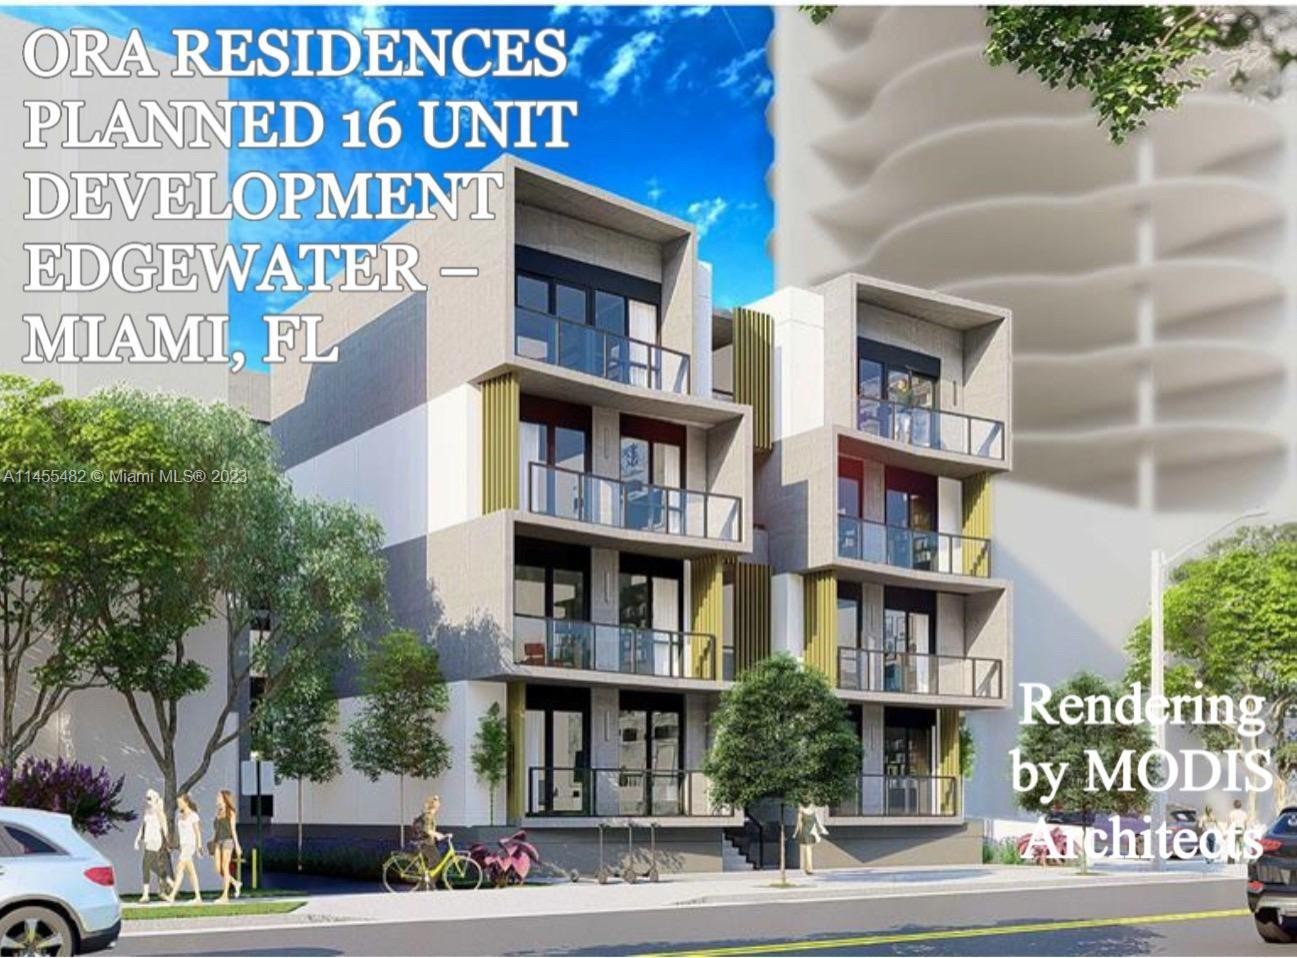 9. Ora Residences Development